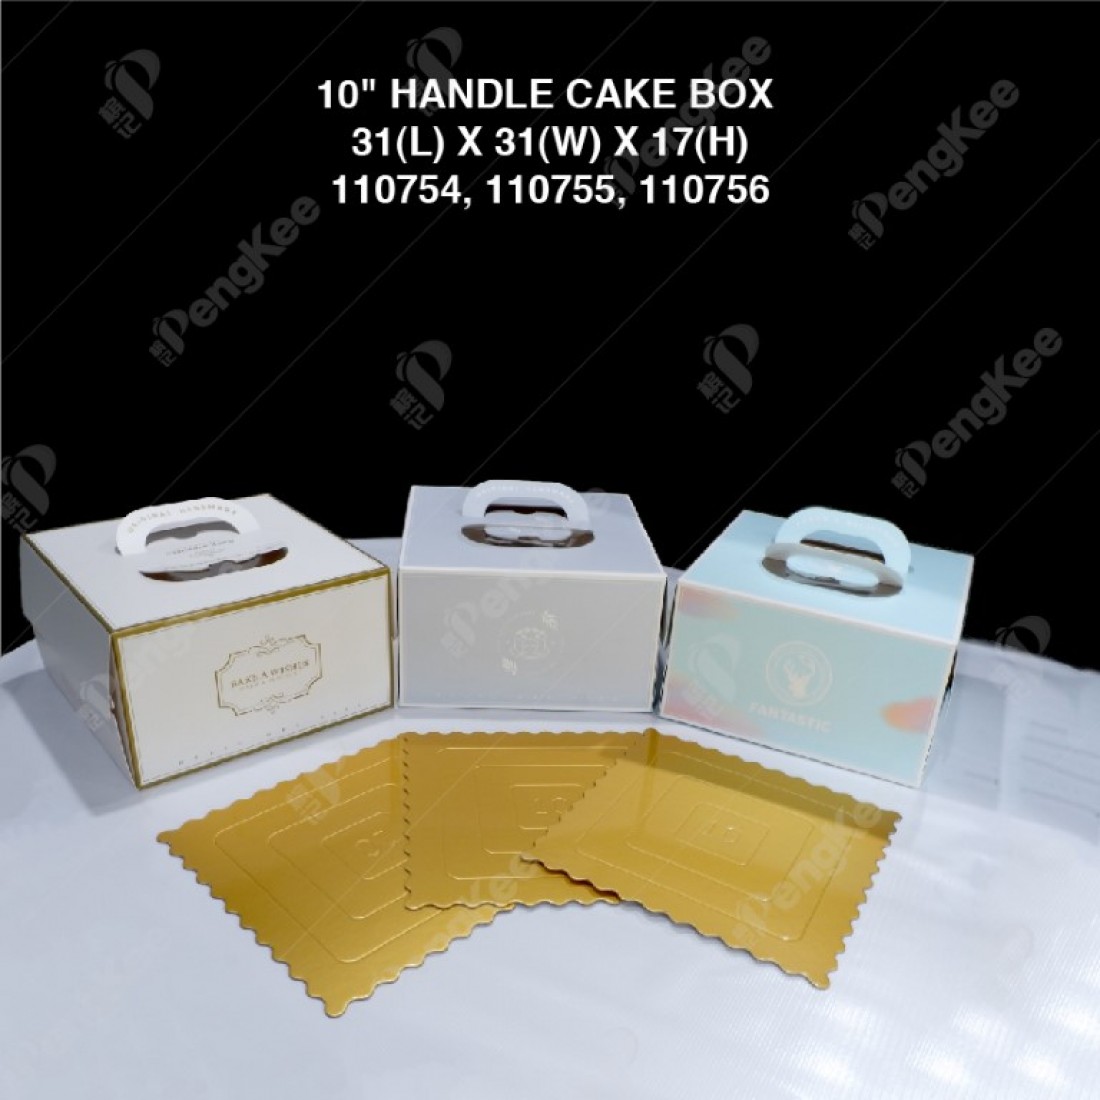 10" HANDLE CAKE BOX (31(L)*31(W)*17(H)CM) 